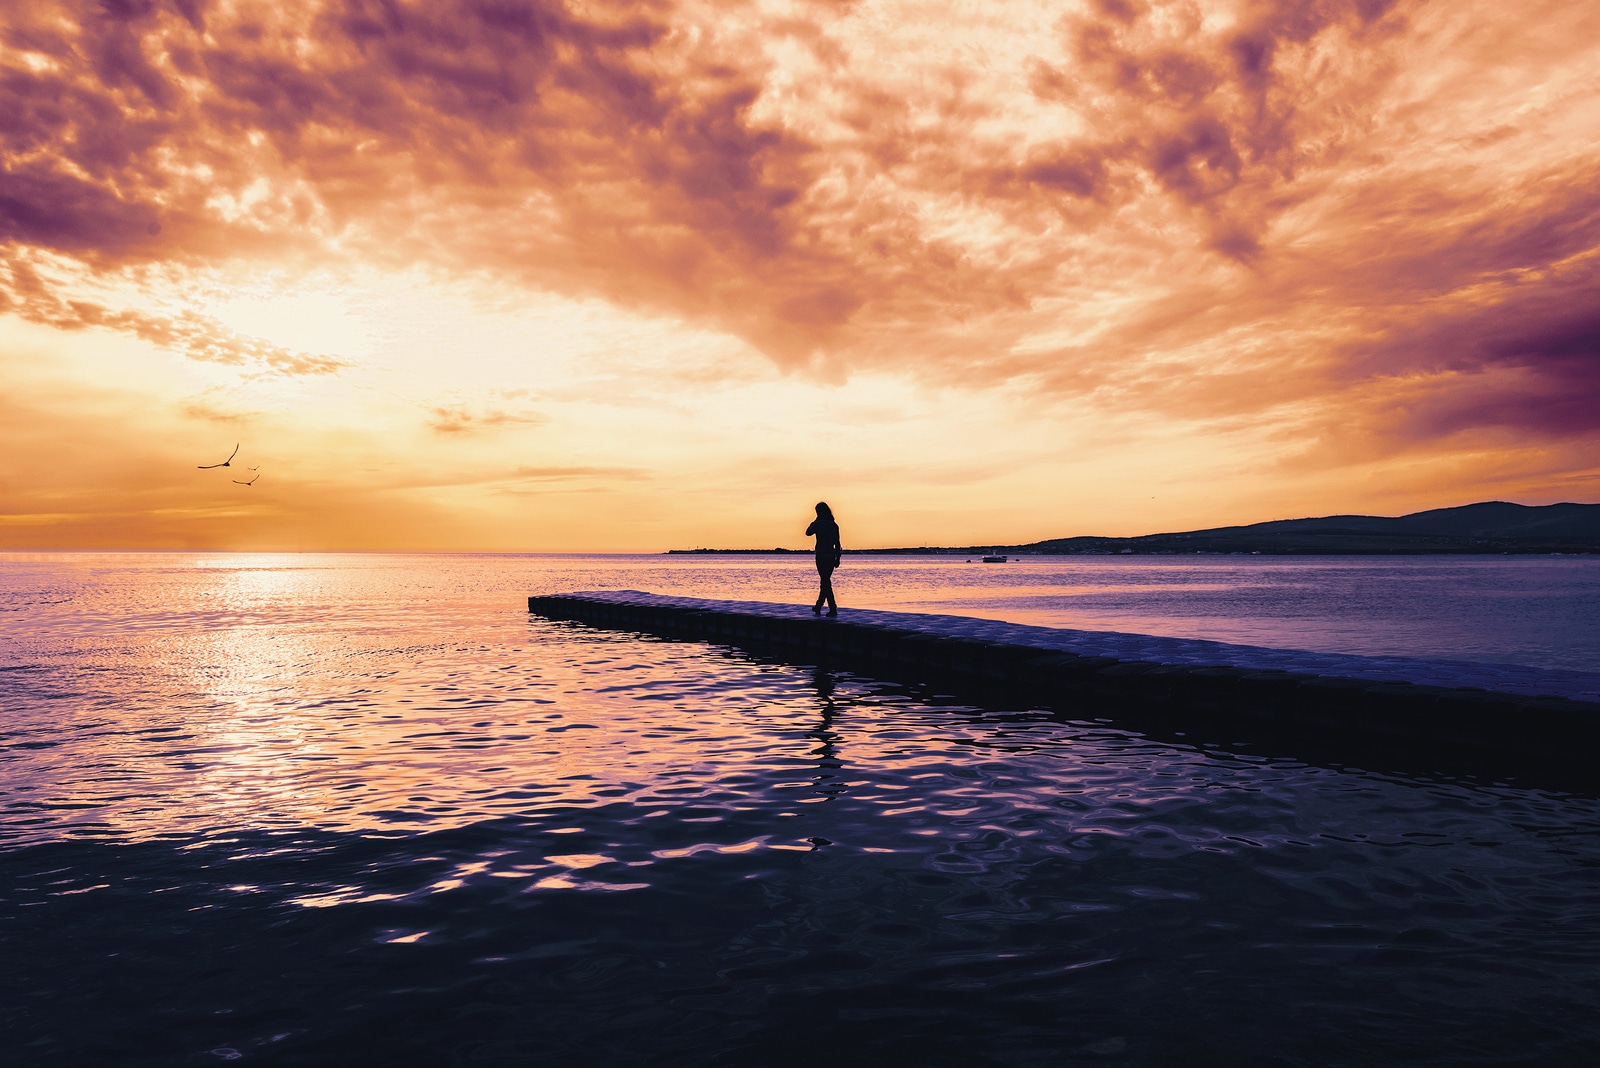 Woman walking on pier near the sea at sunset tranquil scene. Beautiful seascape